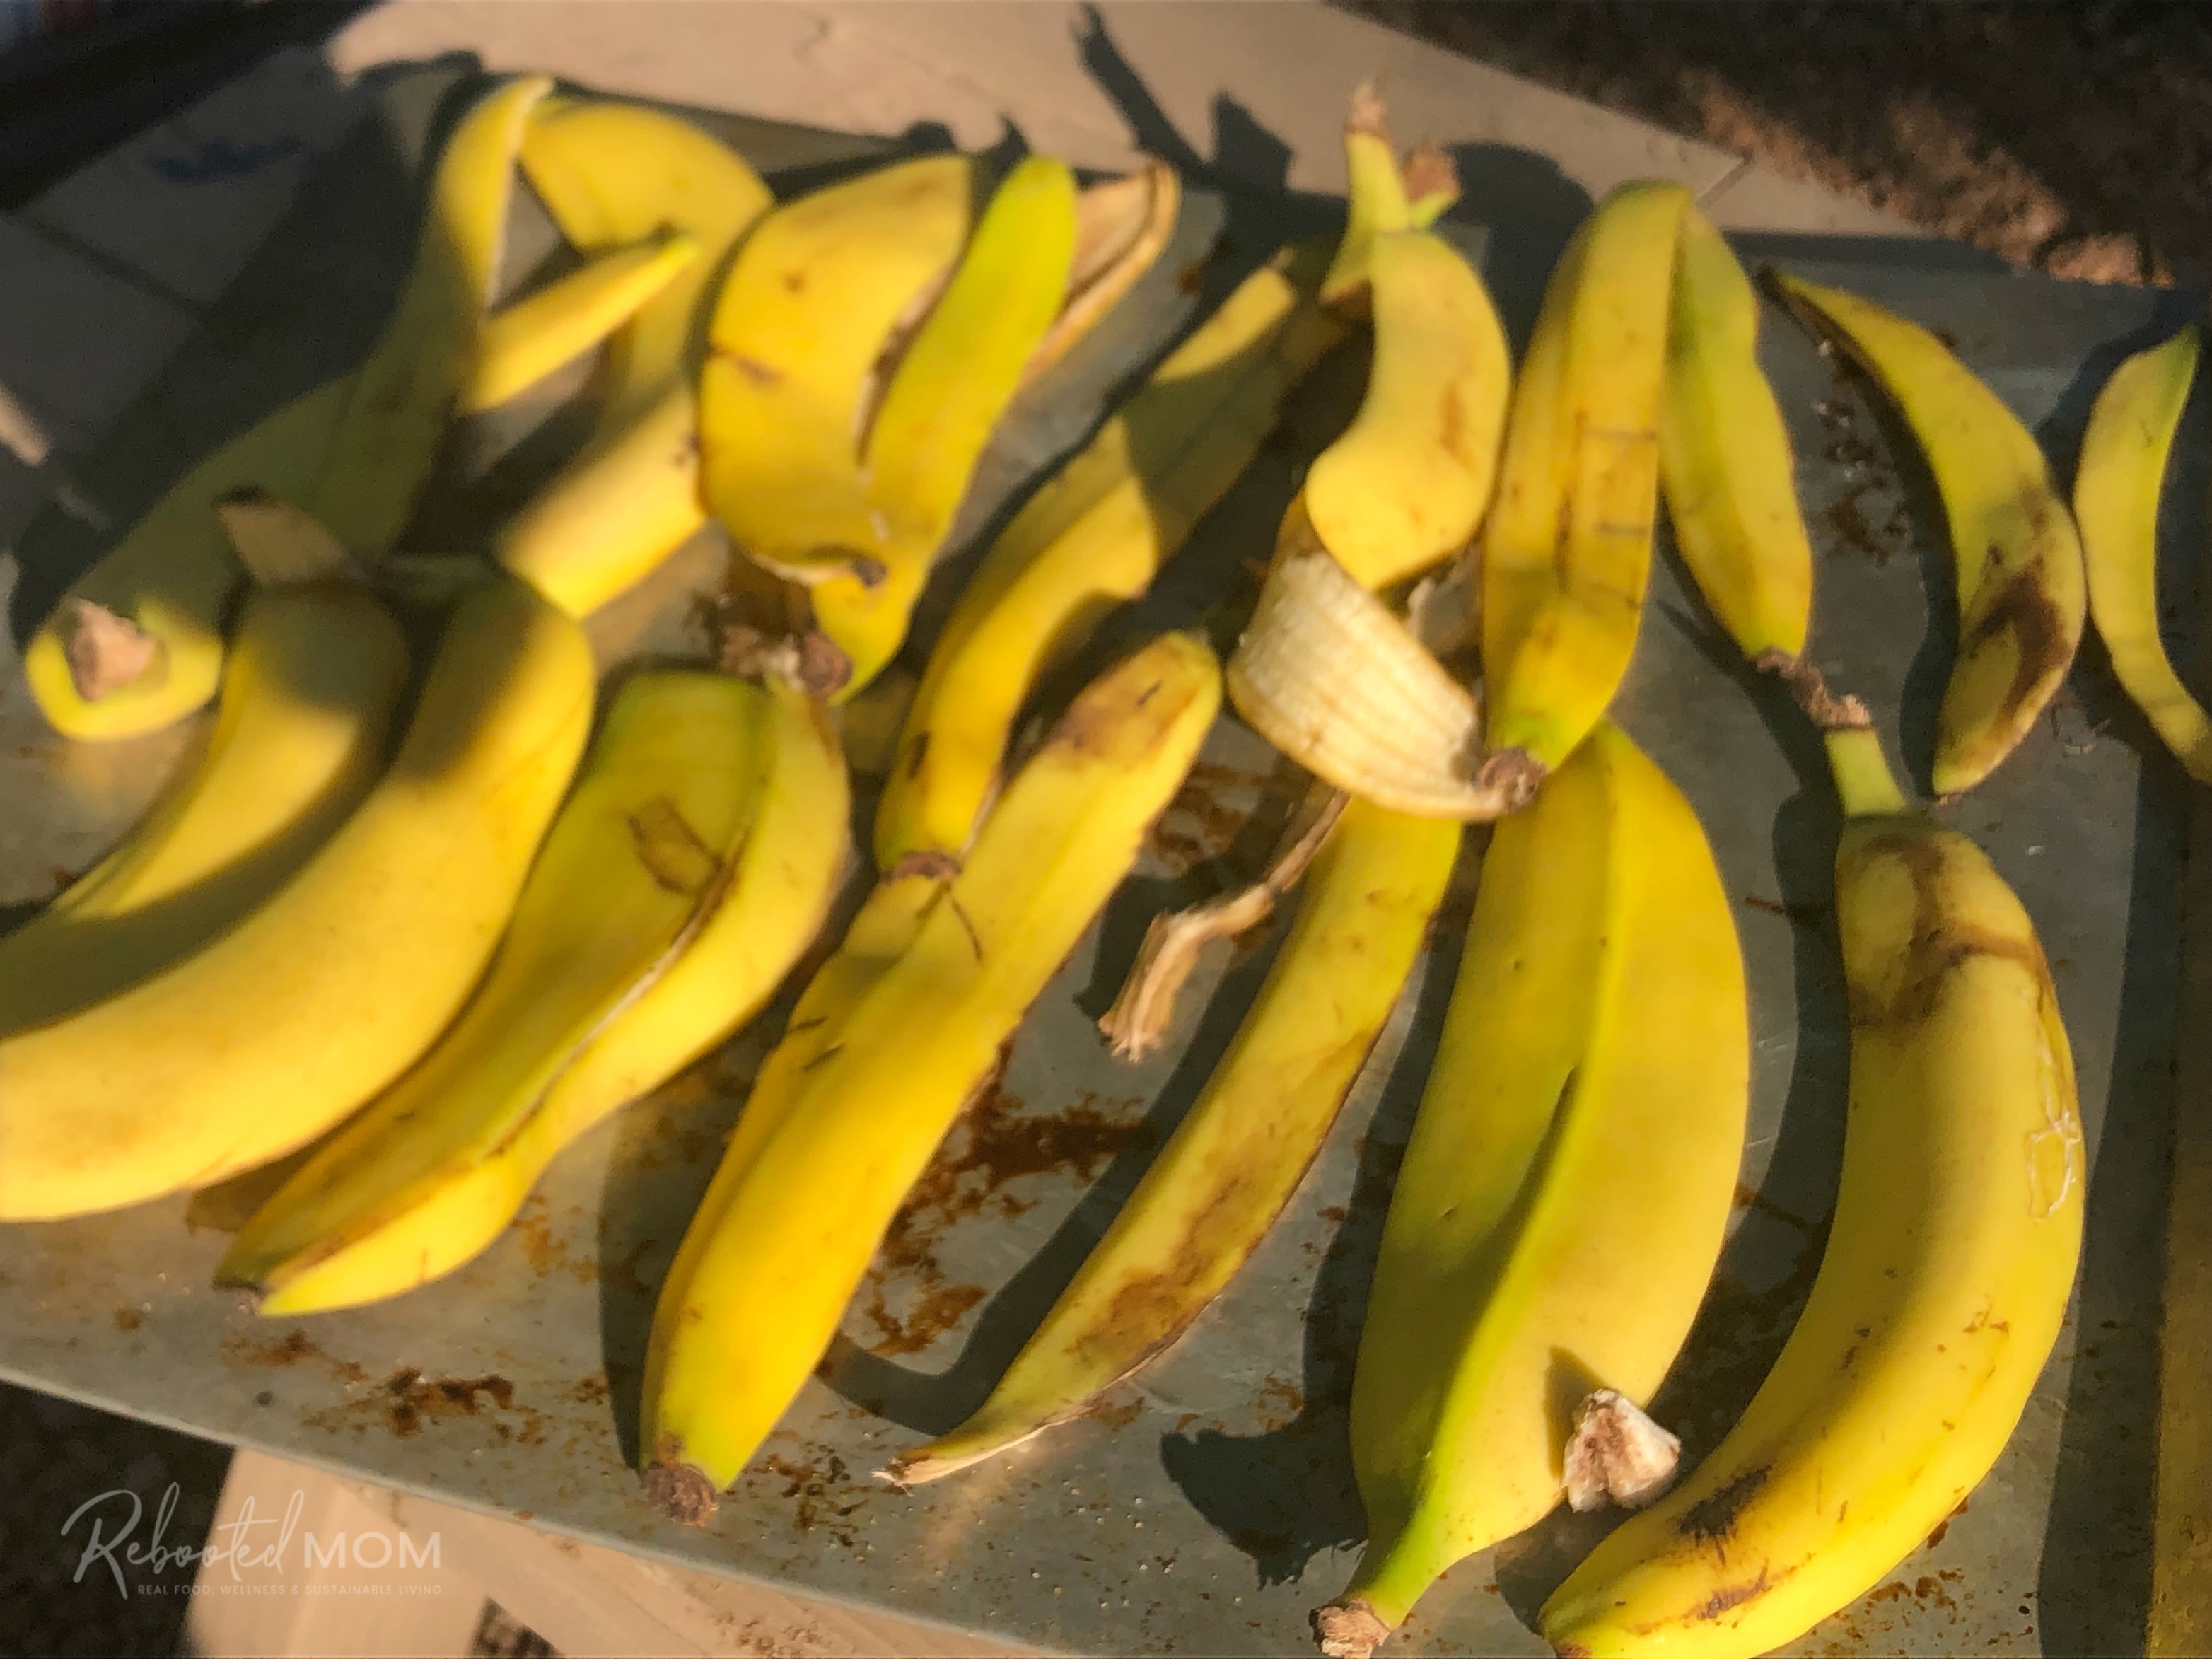 Banana peels drying in the sun